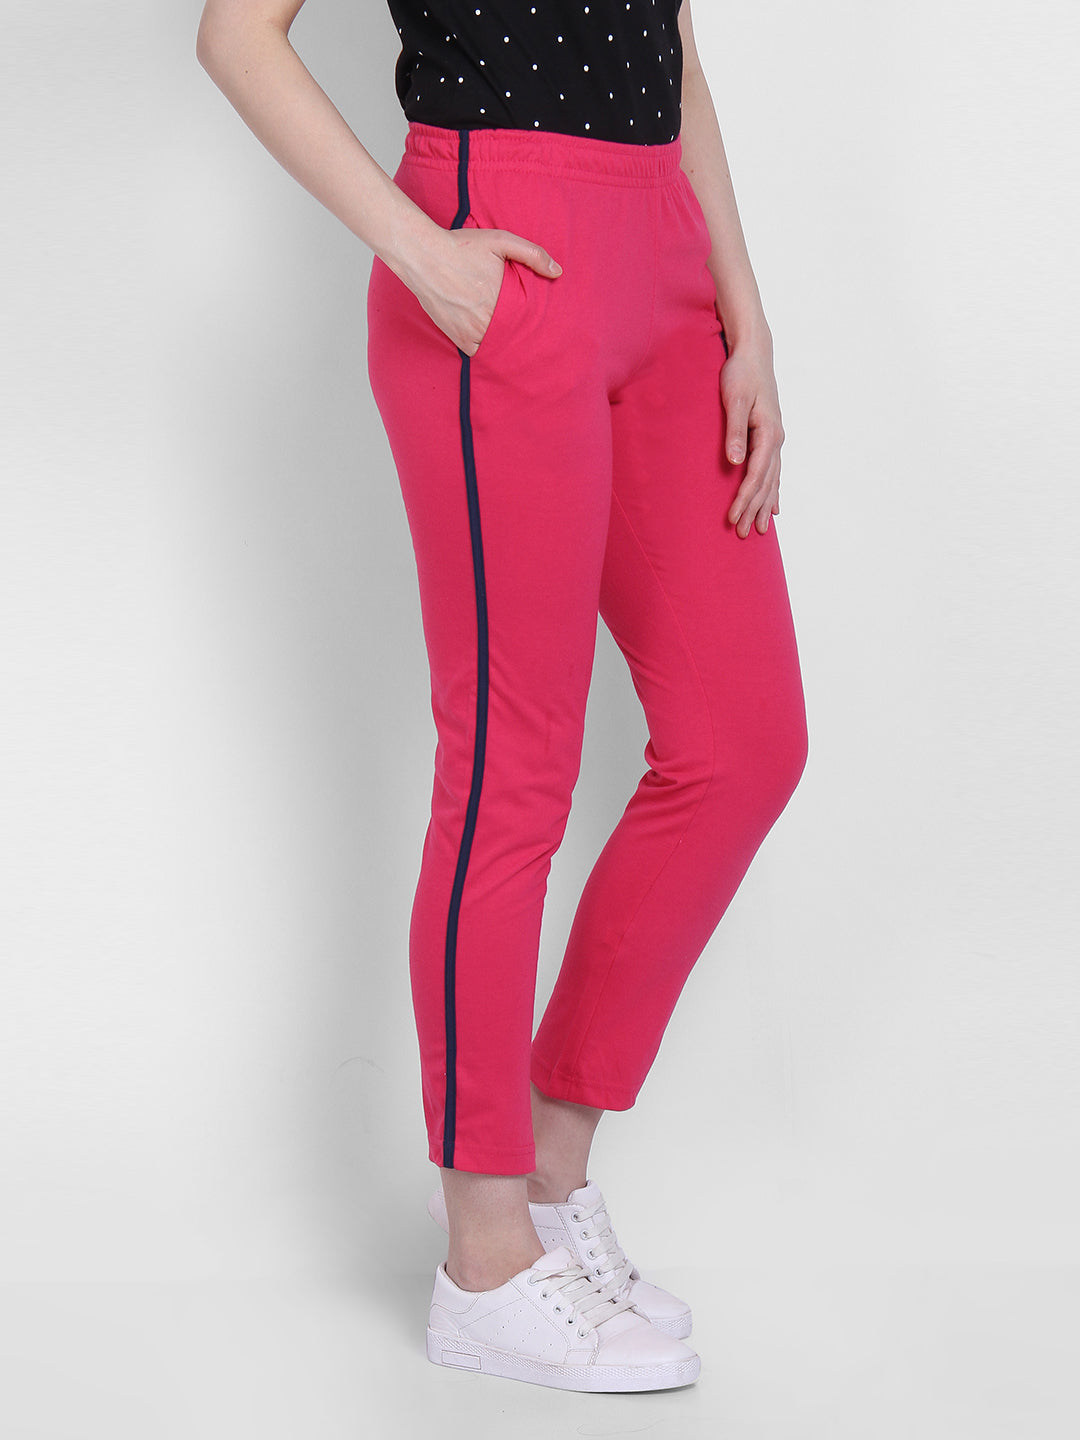 Neva Women's Track Pant - Hot Pink